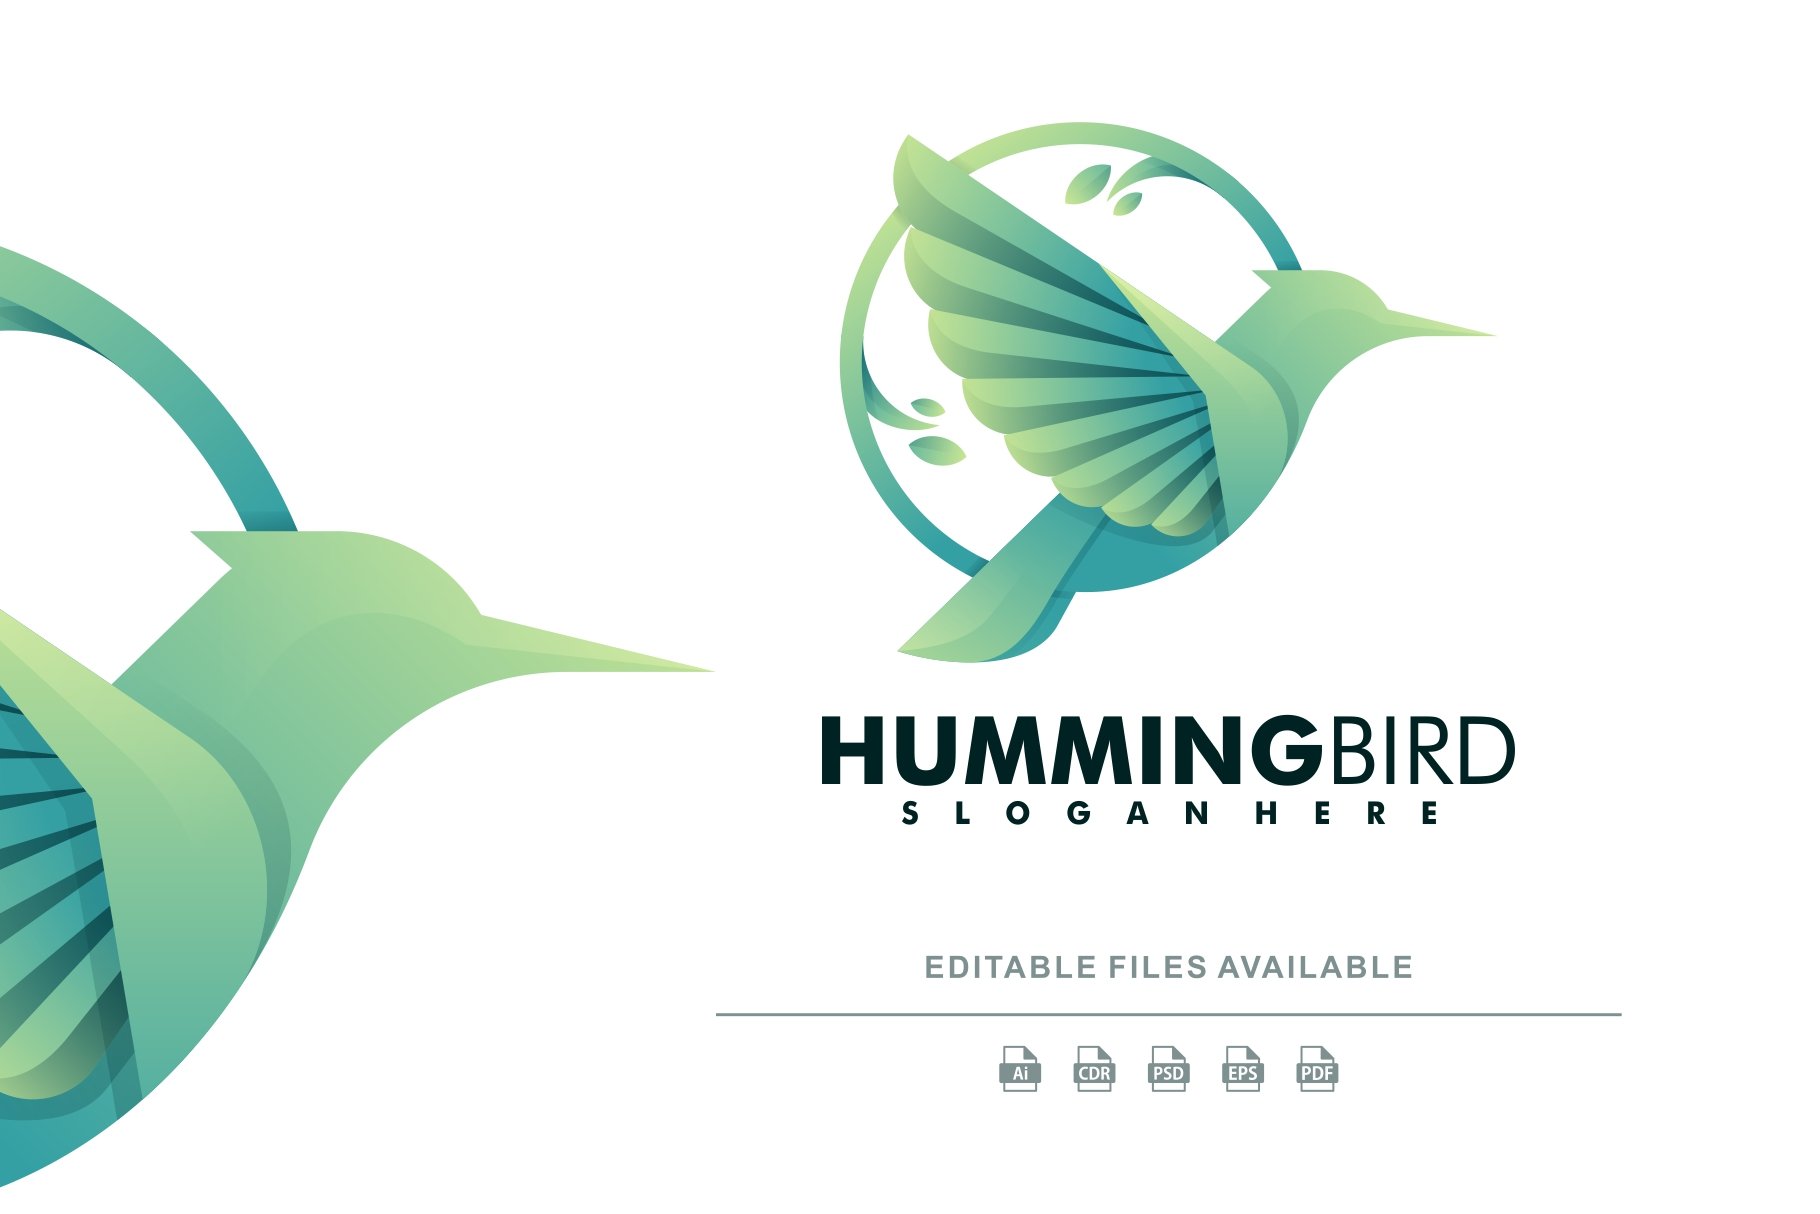 Hummingbird Colorful Logo cover image.